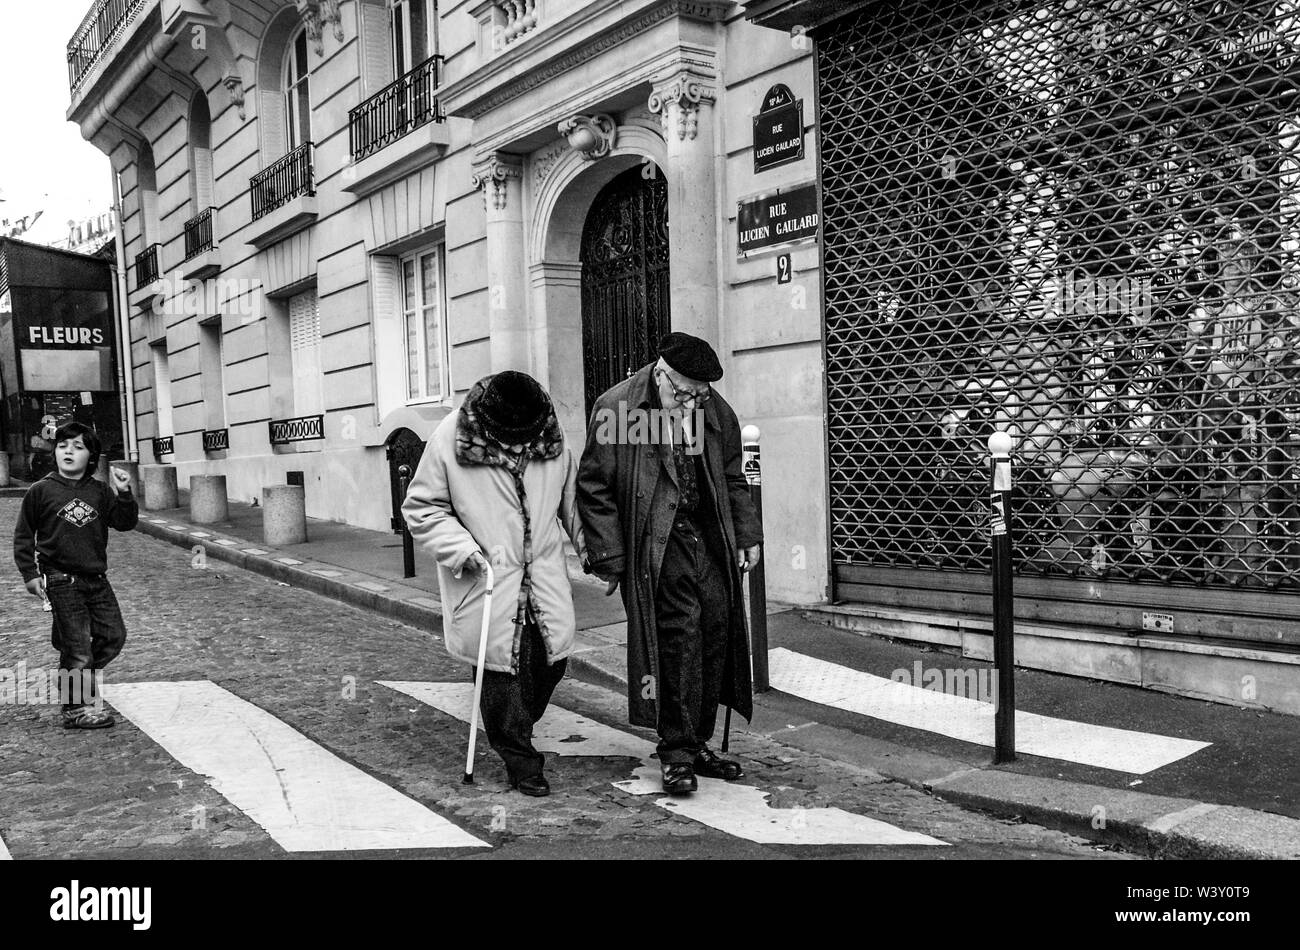 PARIS - ein altes Ehepaar ZU FUSS AUF DER STRASSE - UN-PAAR AGÉS MARCHAND DE PERSONNES dans la rue - PARIS STREET FOTOGRAFIE - PARISER MENSCHEN © Frédéric BEAUMONT Stockfoto